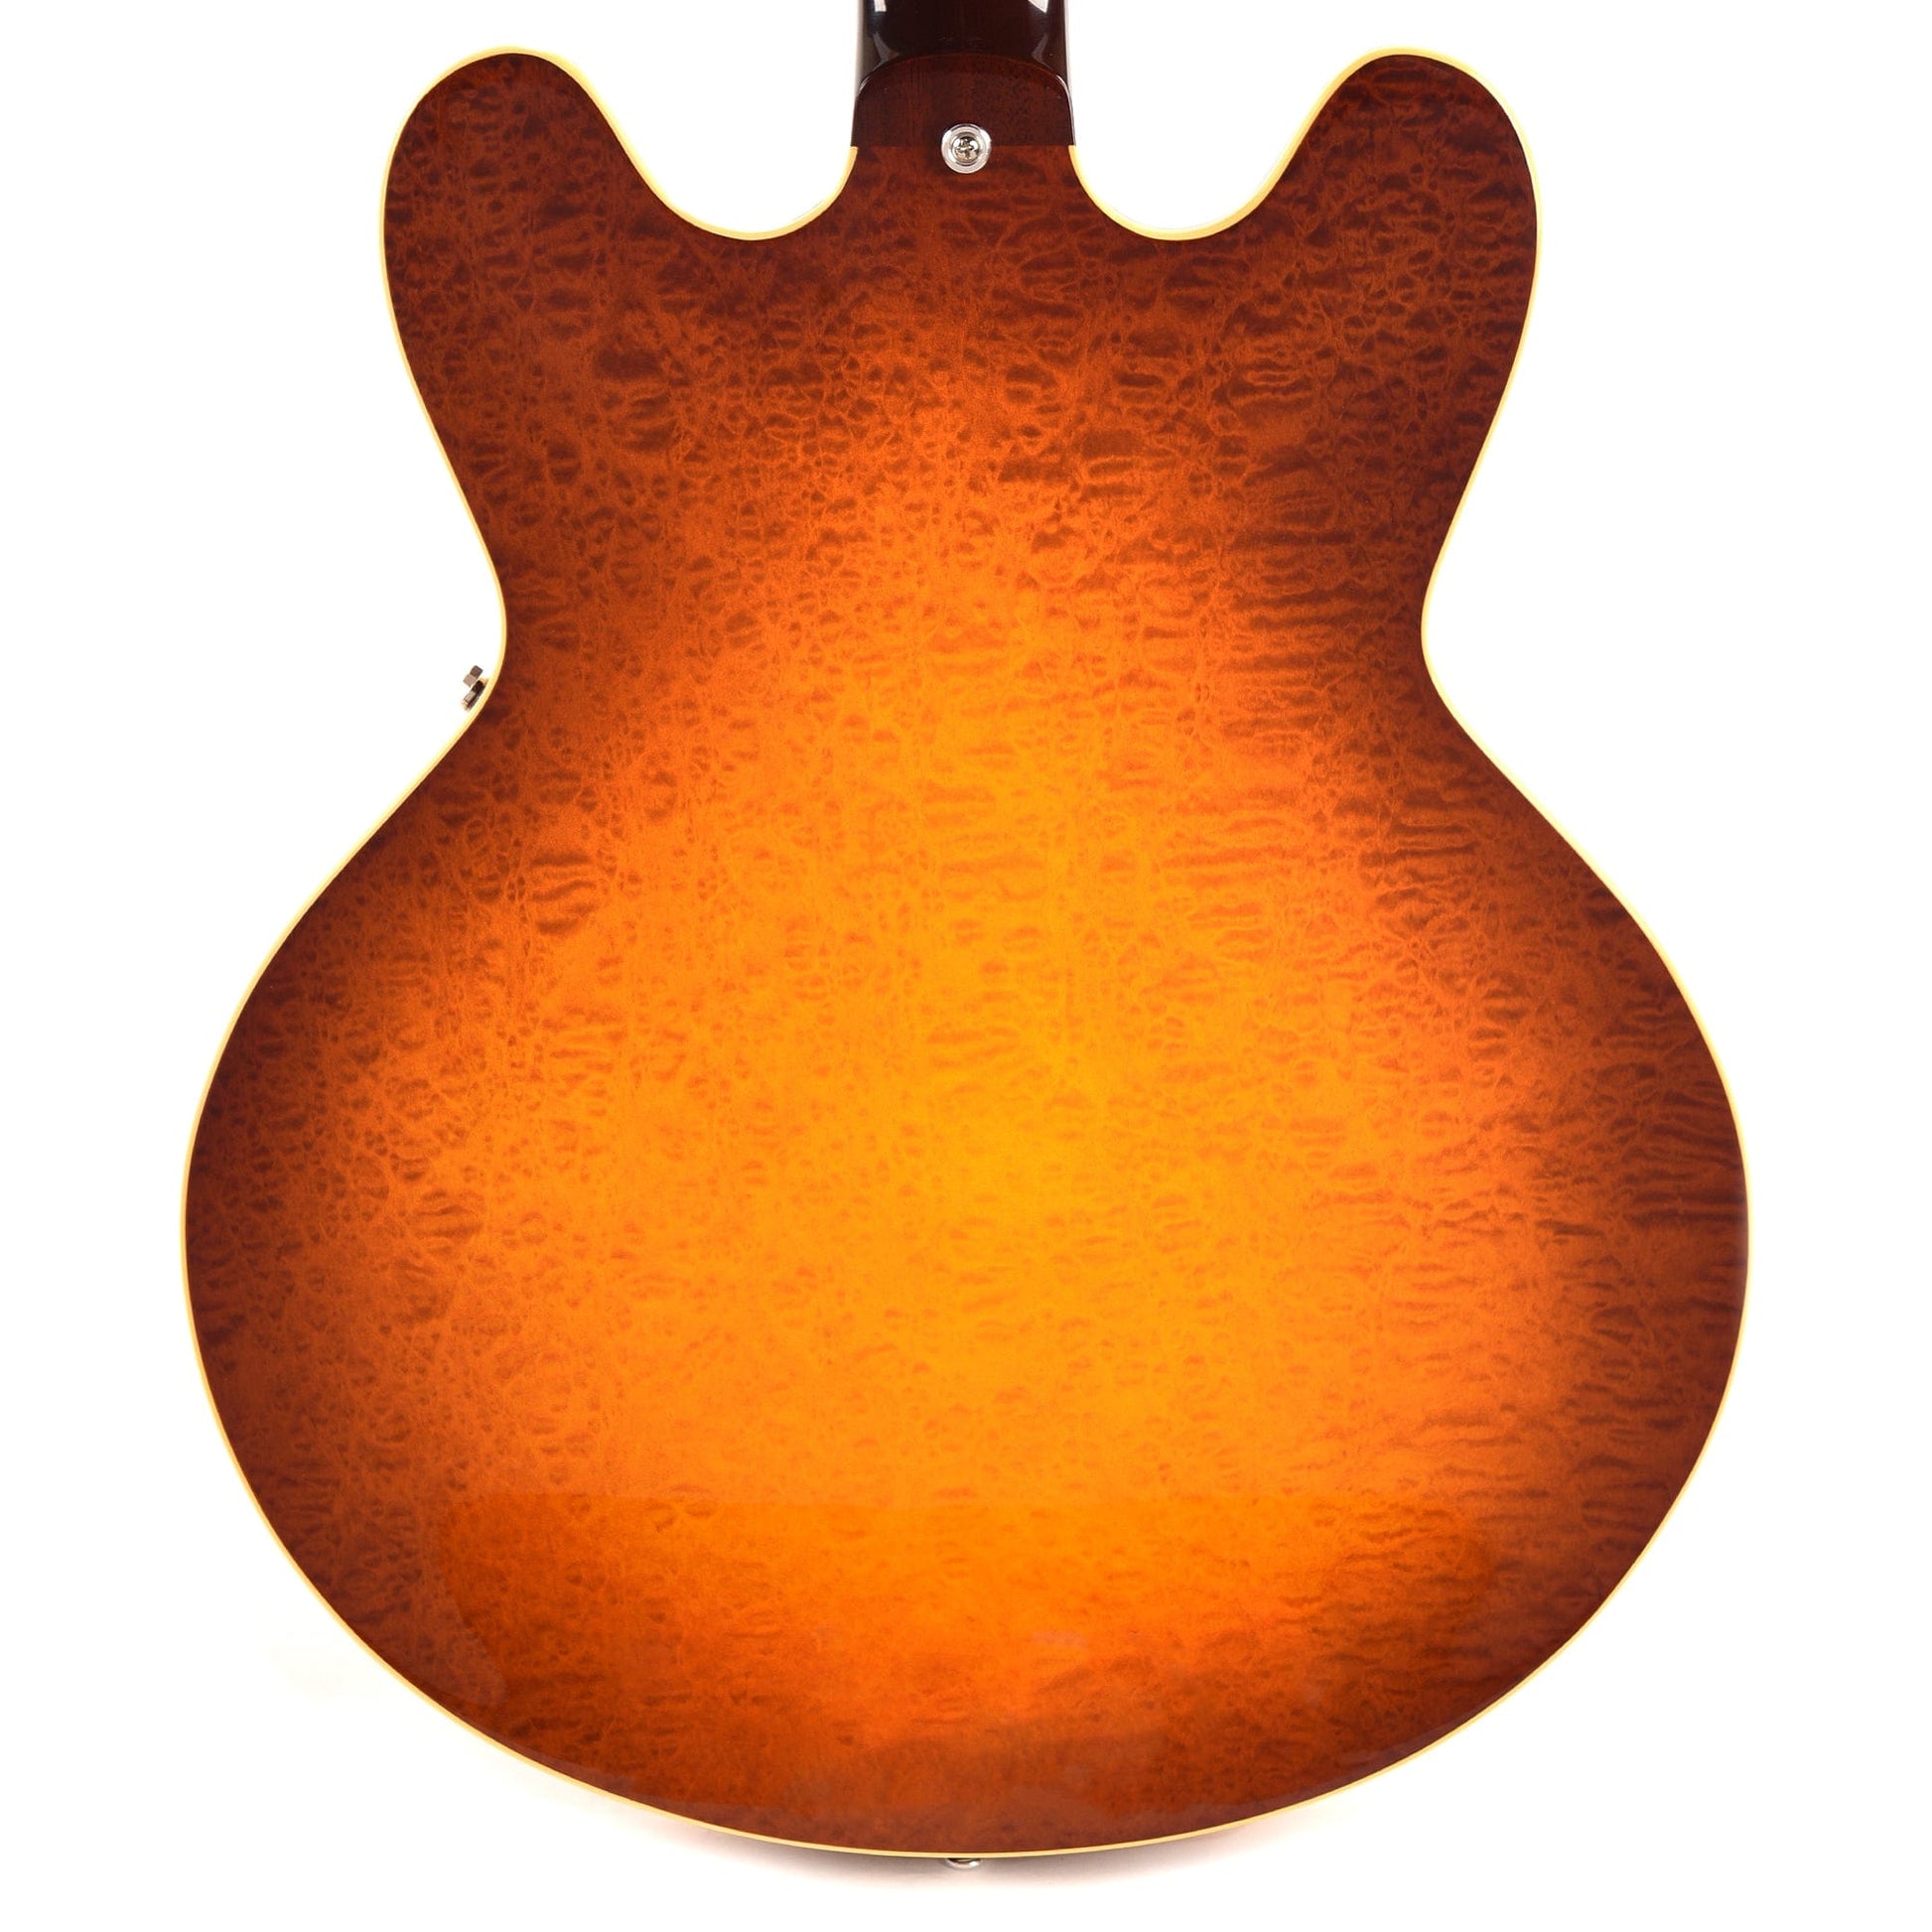 Heritage Custom Shop Core Special Edition H-535 Blistered Maple Almond Sunburst Electric Guitars / Semi-Hollow